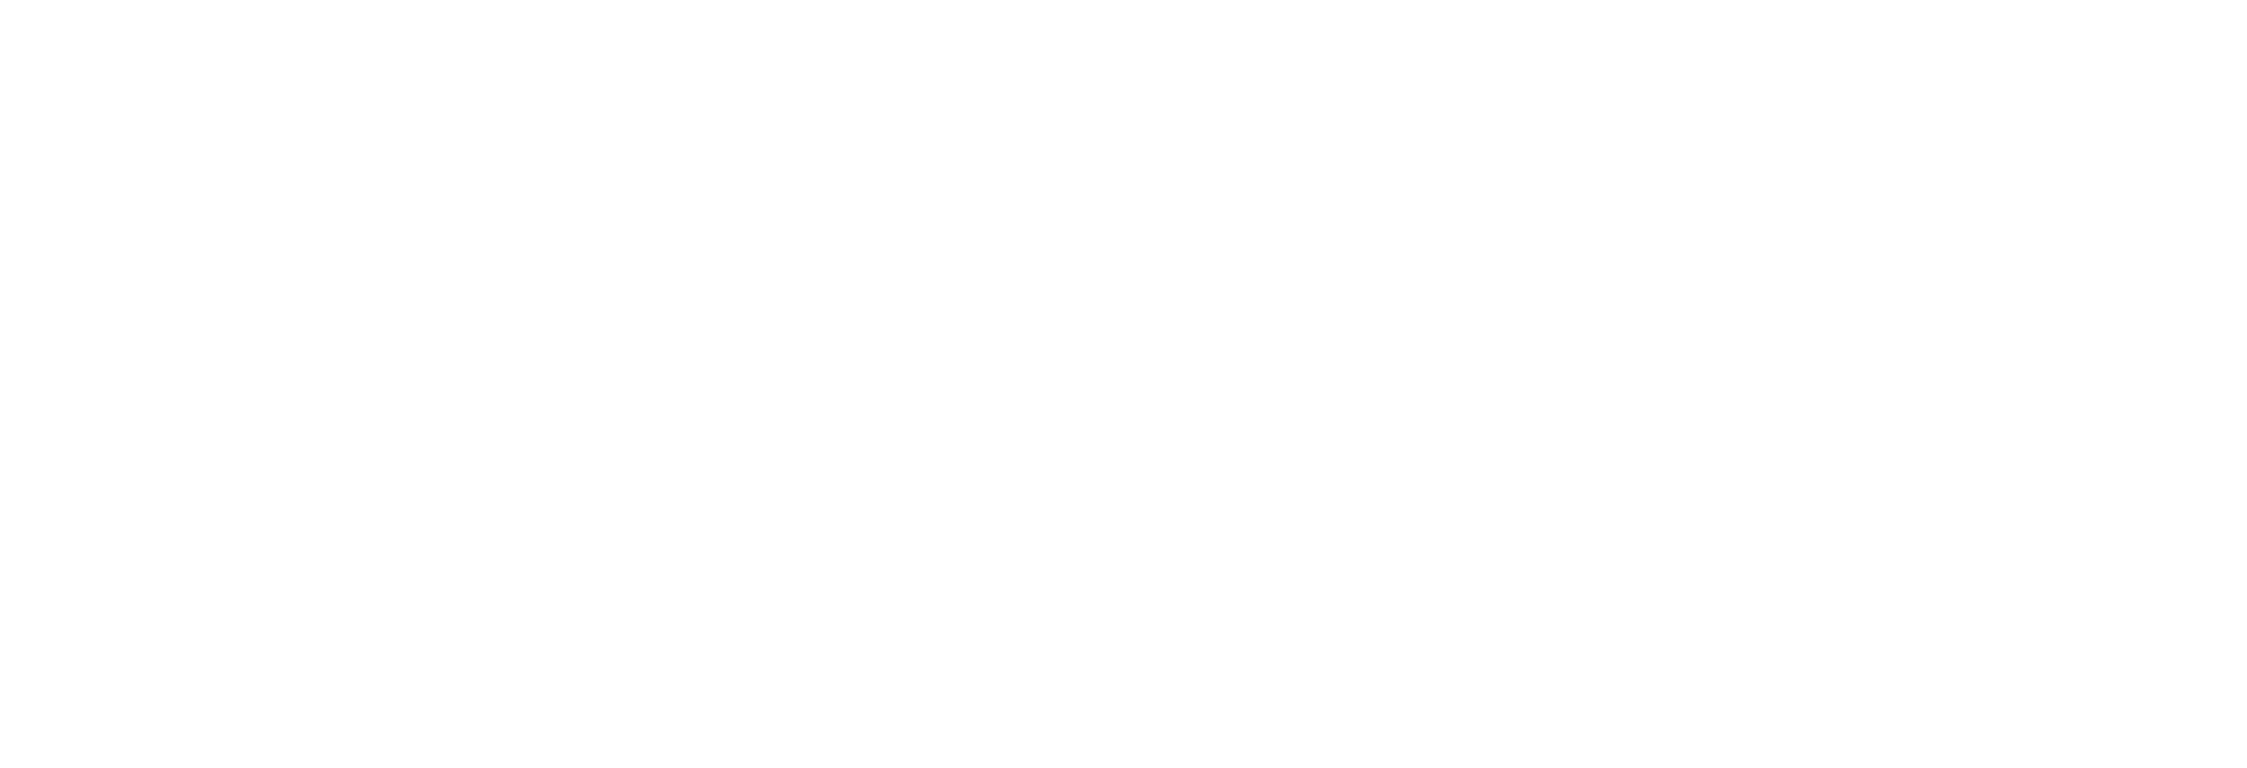 Travis Wilson Ministries Logo